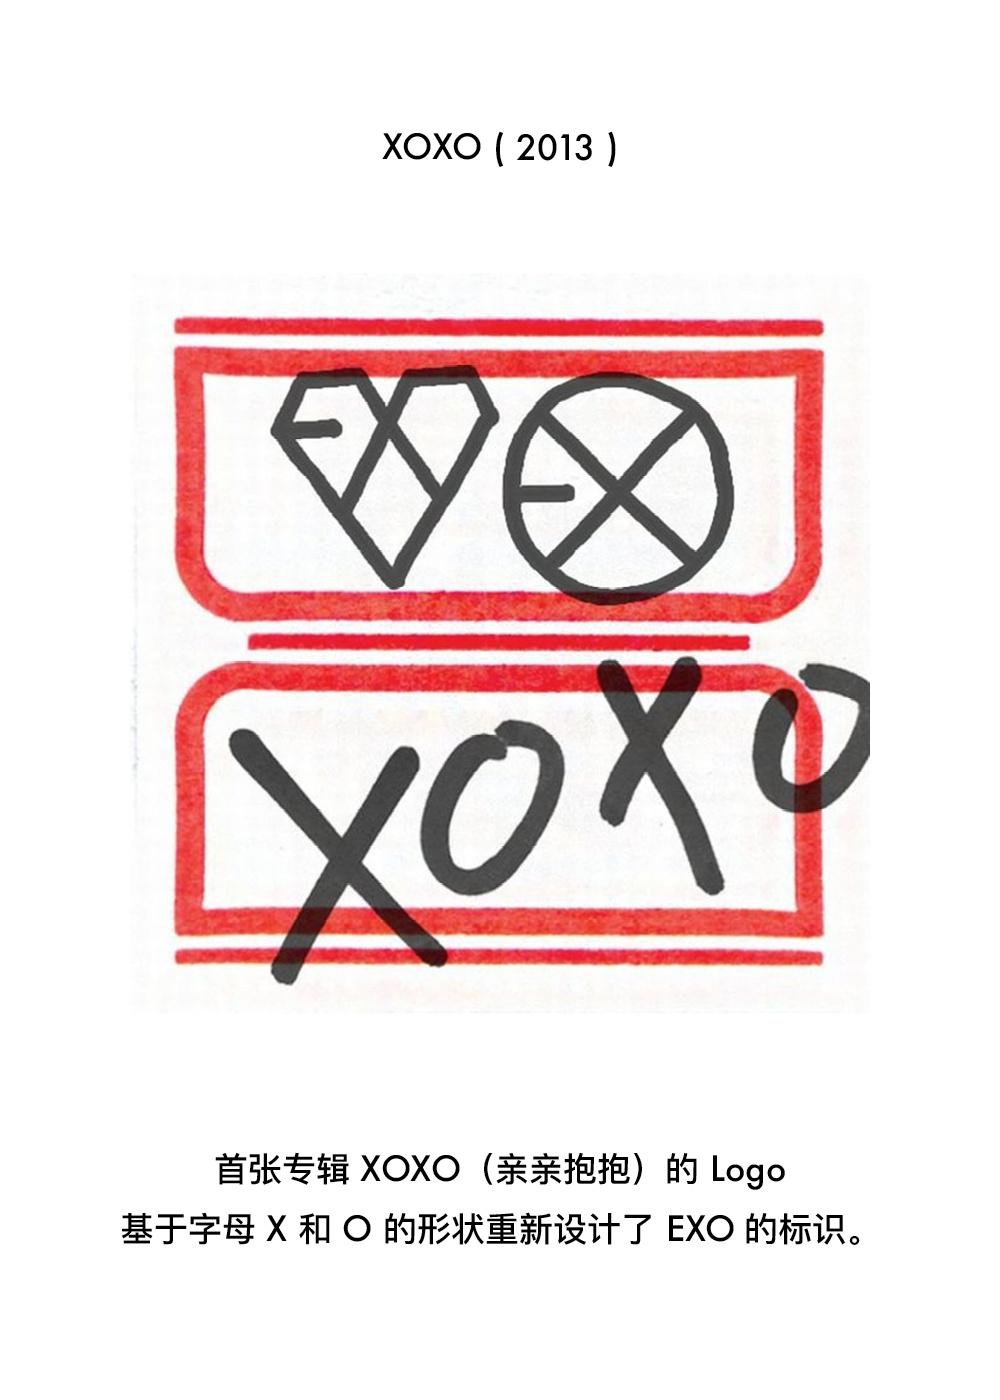 [exo][分享]191102 exo历年logo大赏,契合歌曲主题的